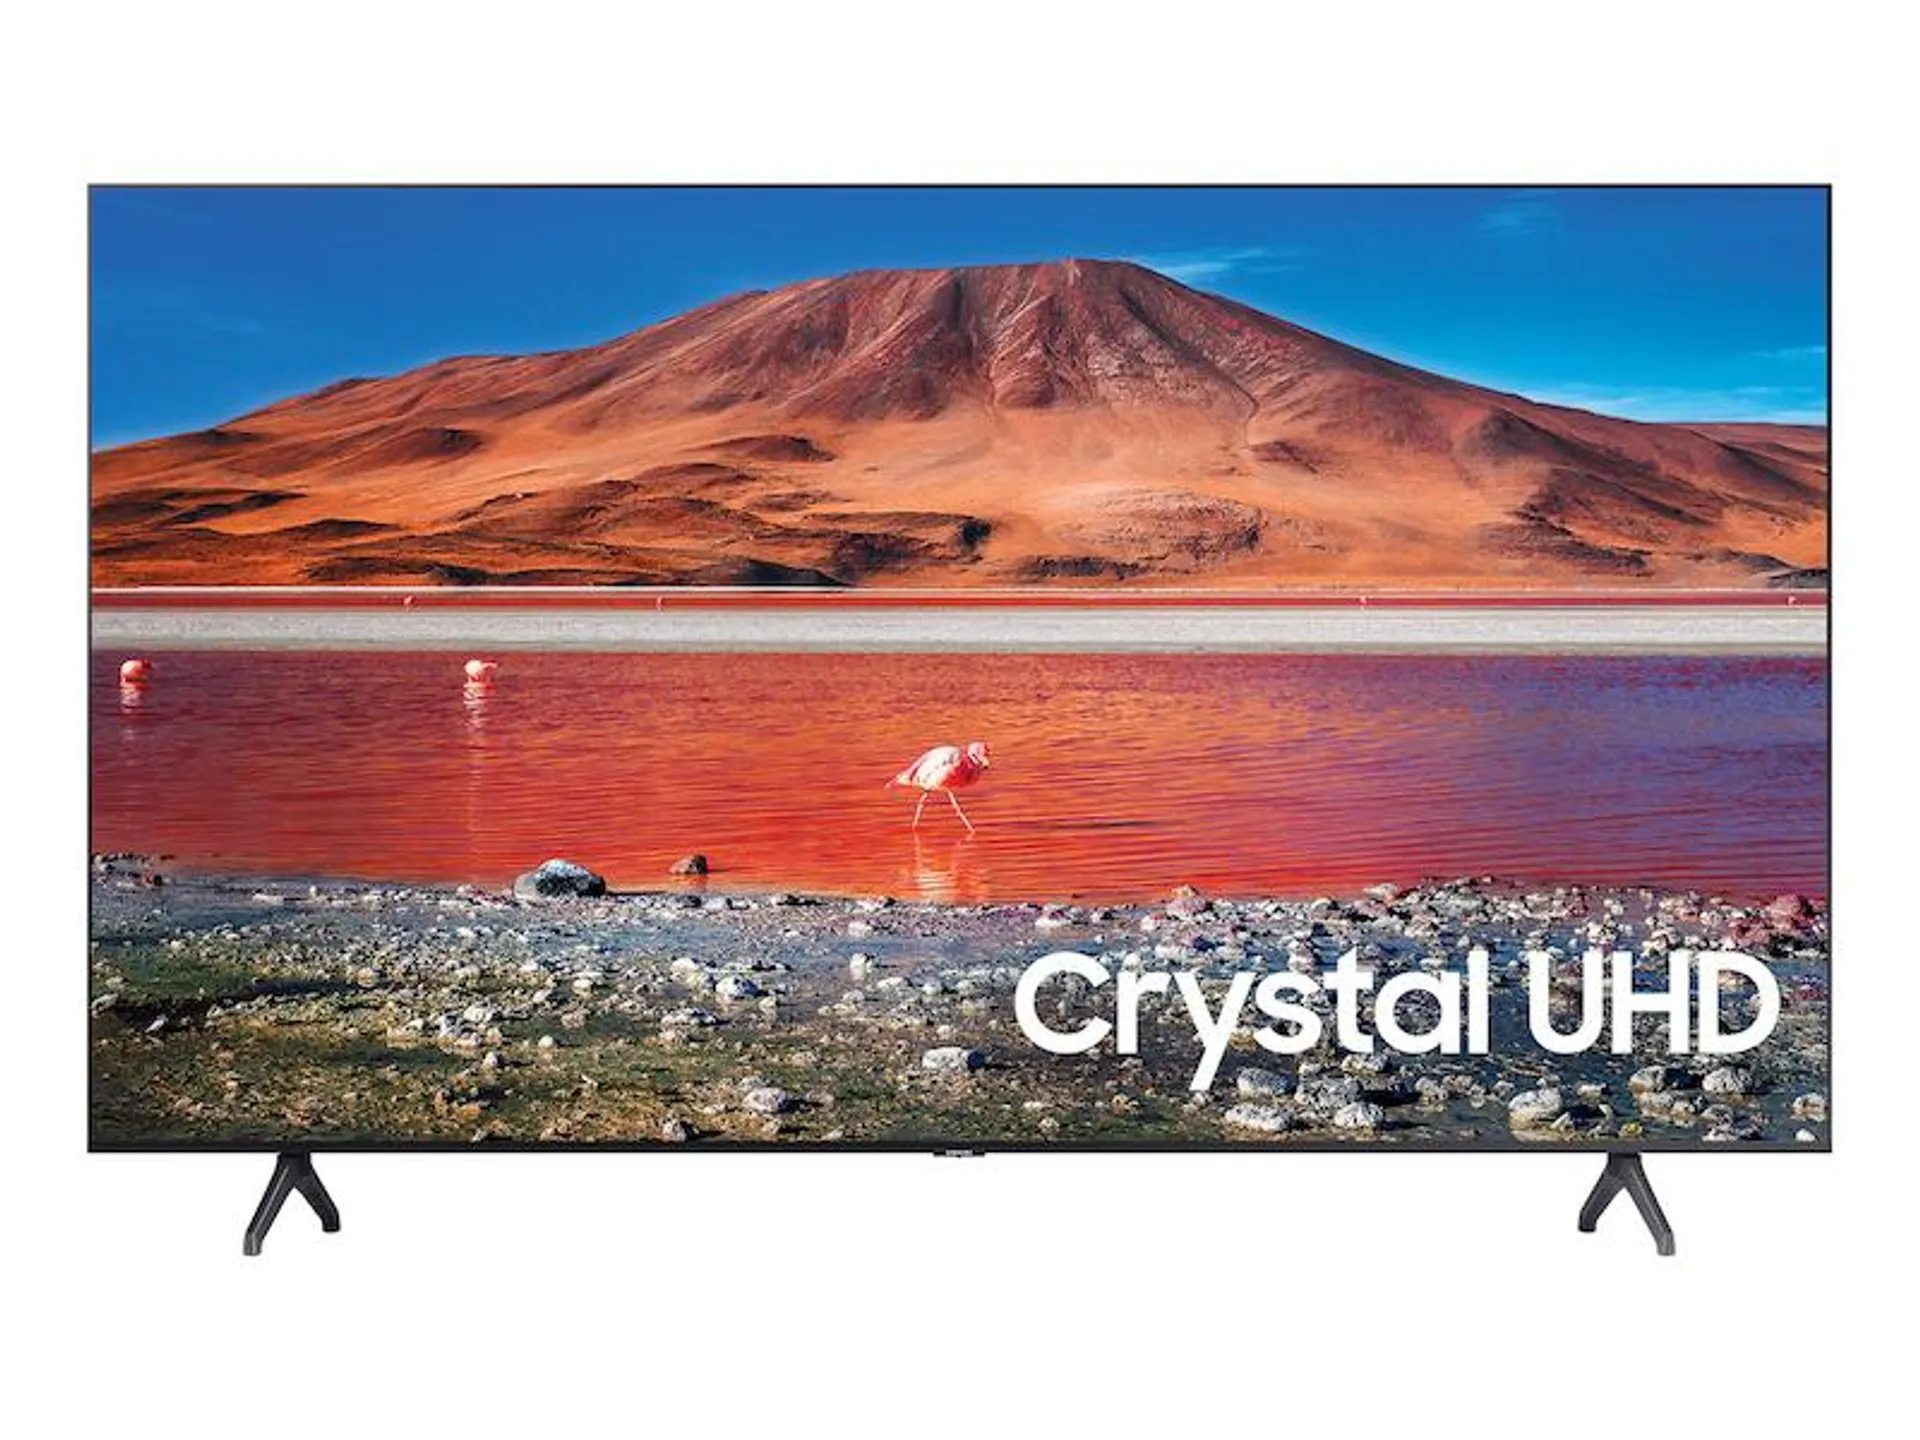 43" Class TU7000 Crystal UHD 4K Smart TV (2020)